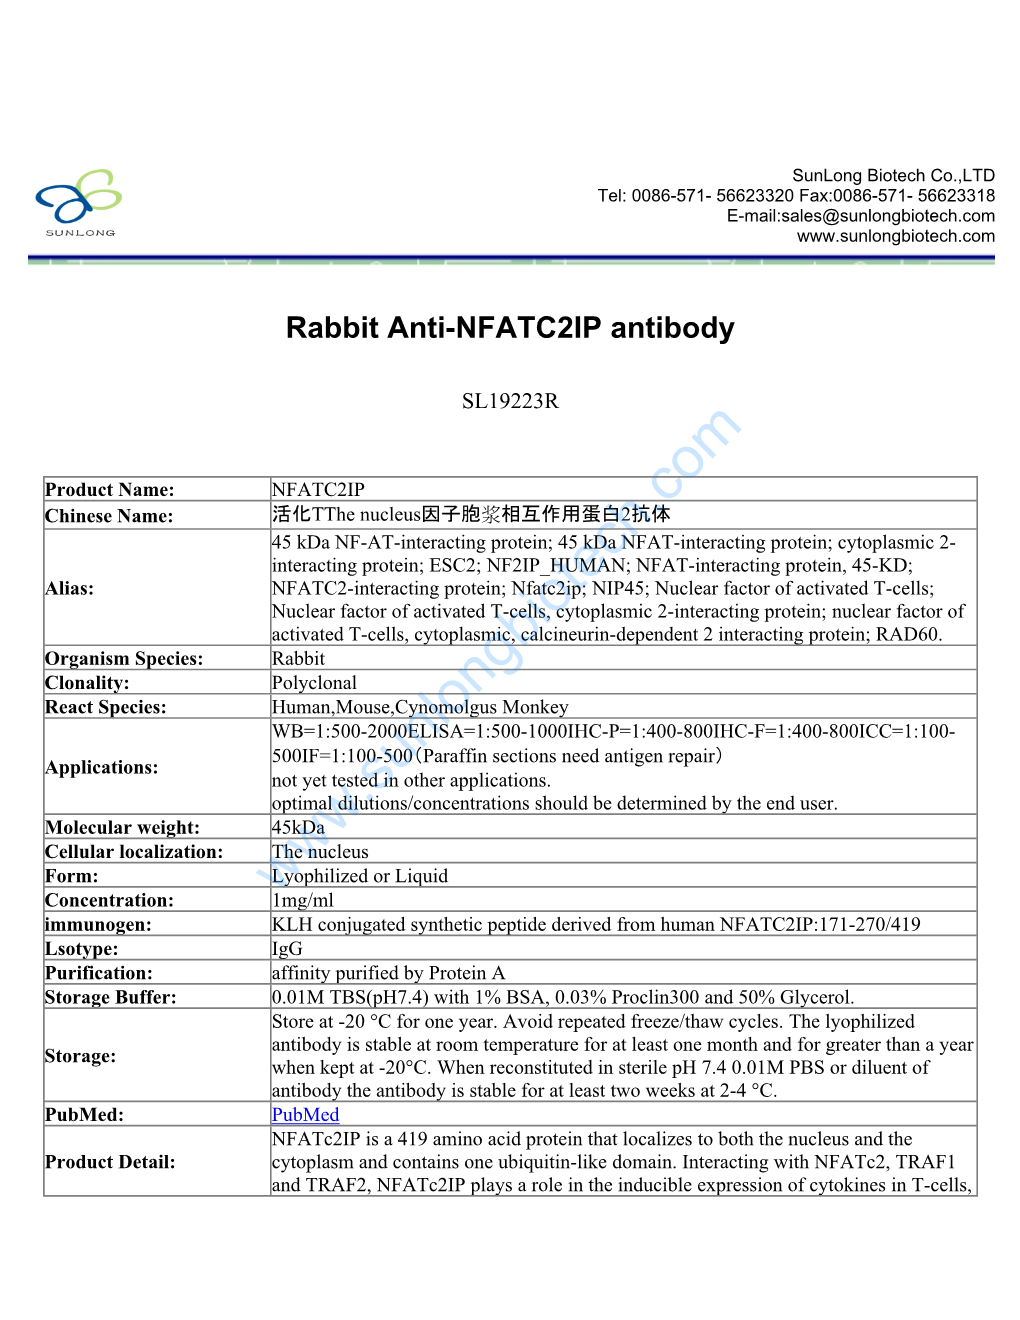 Rabbit Anti-NFATC2IP Antibody-SL19223R